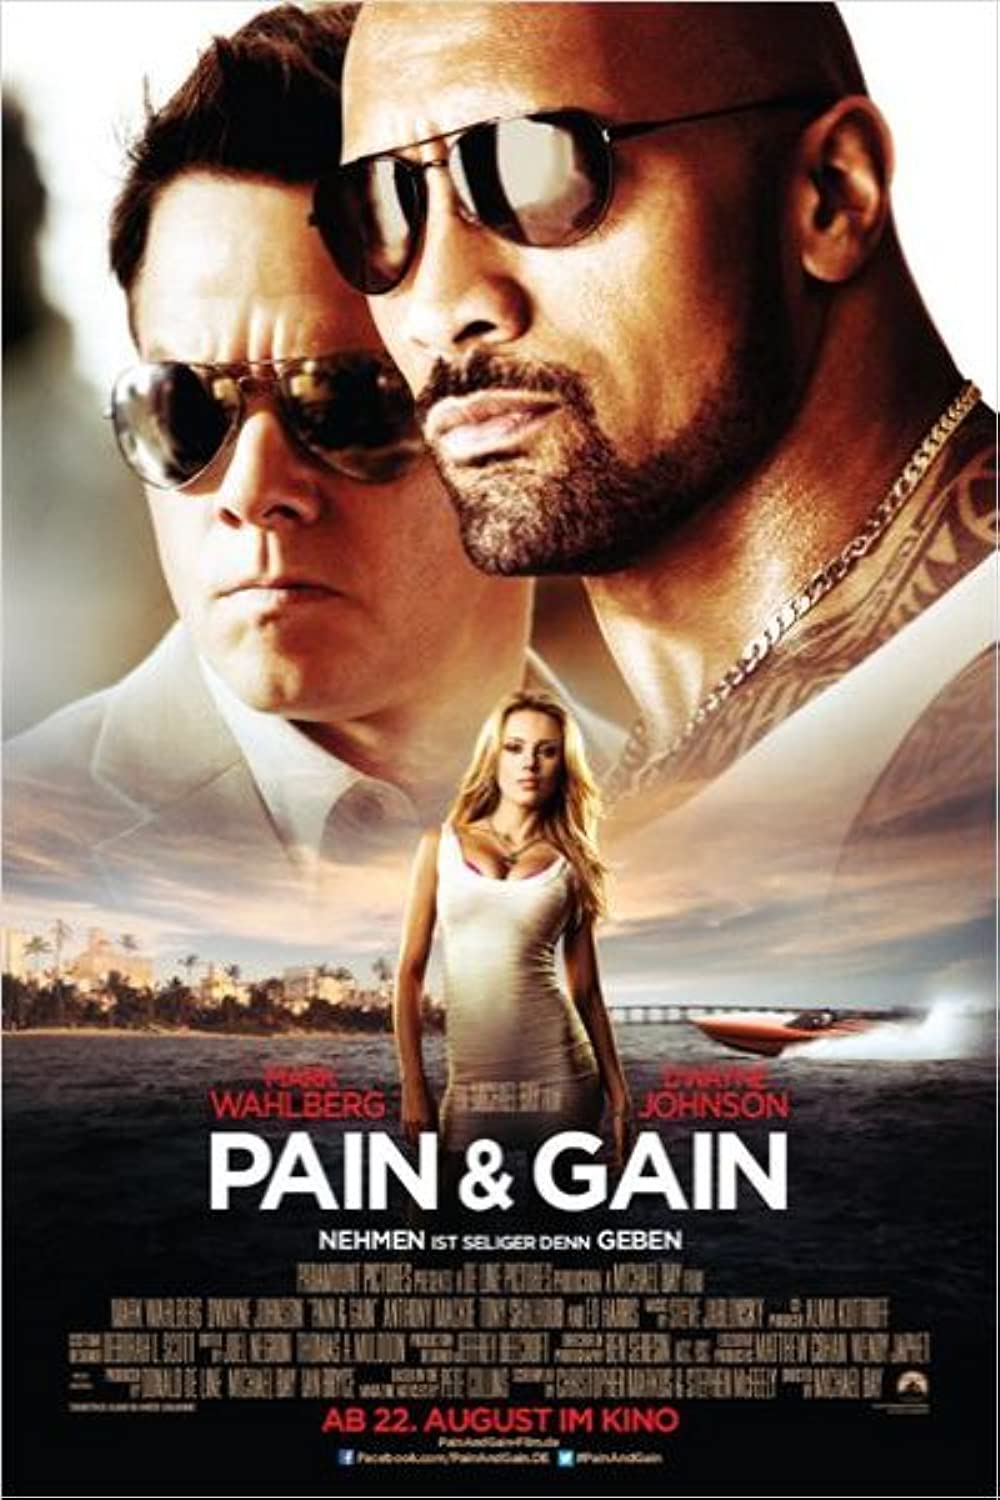 Filmbeschreibung zu Pain & Gain